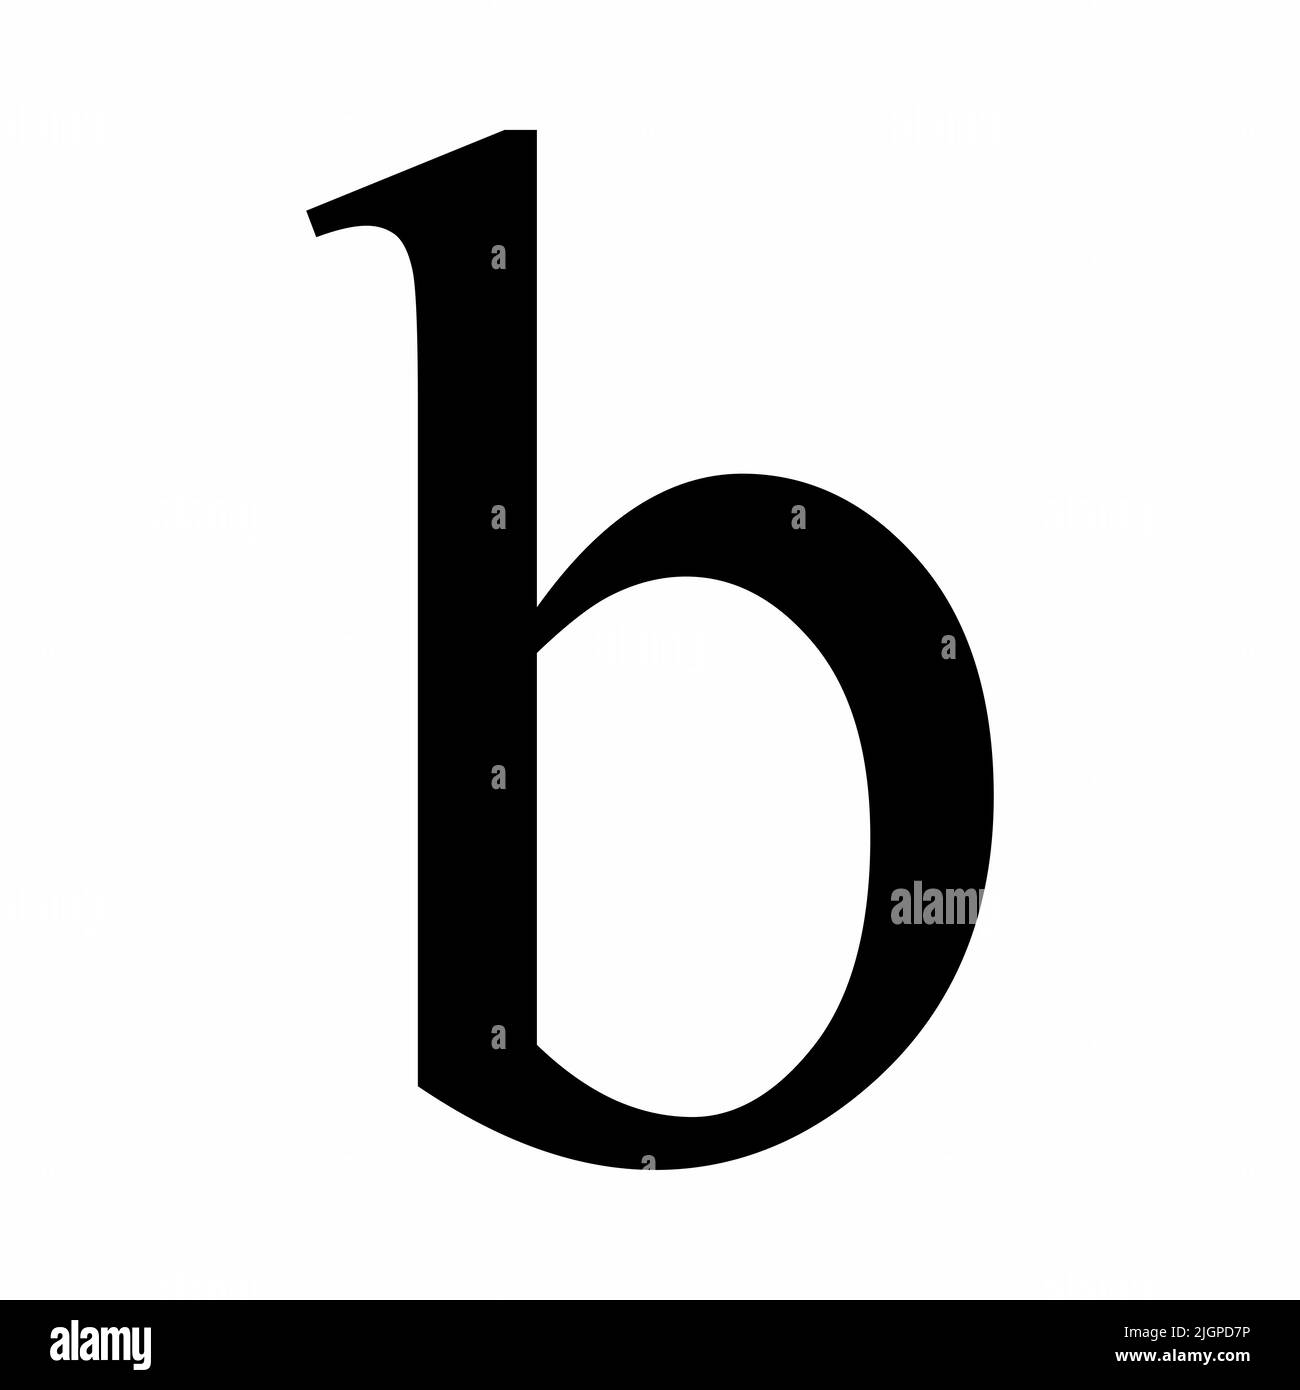 Latin b lowercase symbol isolated on white background Stock Vector